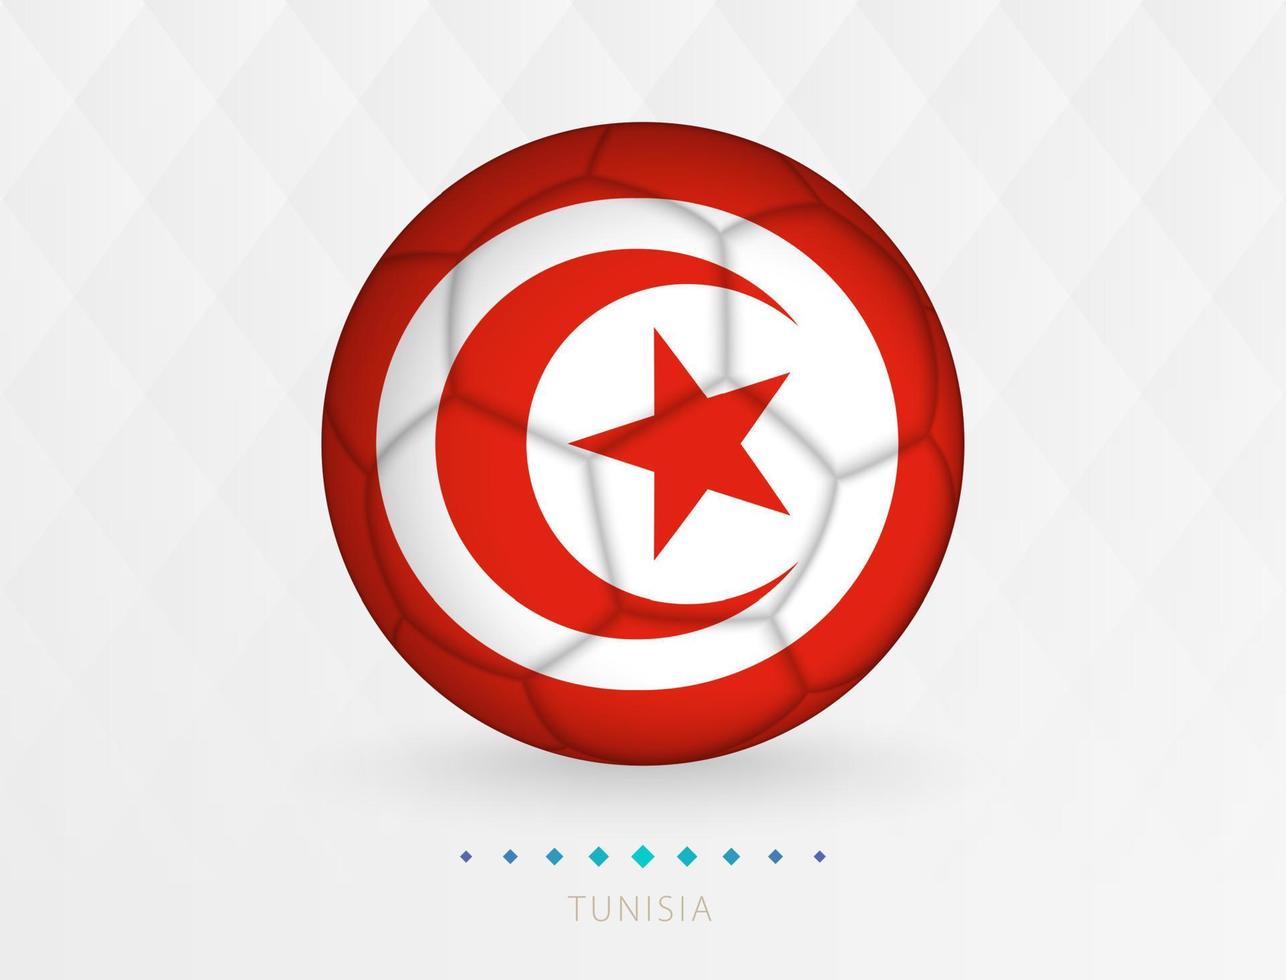 Football ball with Tunisia flag pattern, soccer ball with flag of Tunisia national team. vector